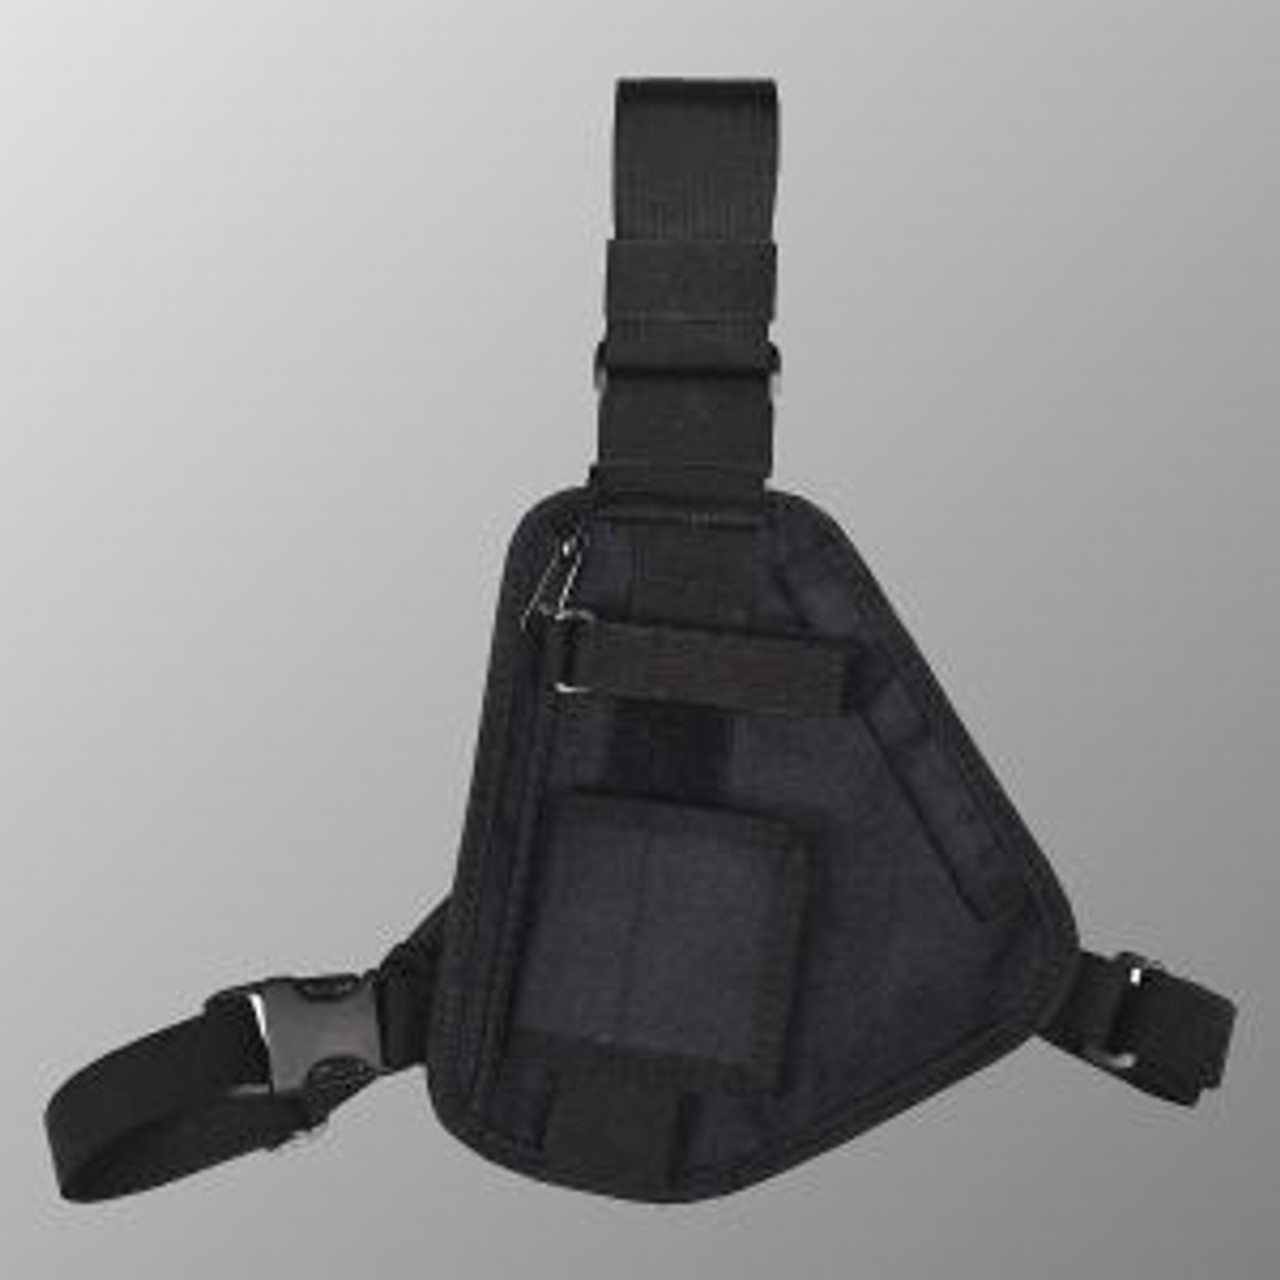 Motorola XPR7380e 3-Point Chest Harness - Black